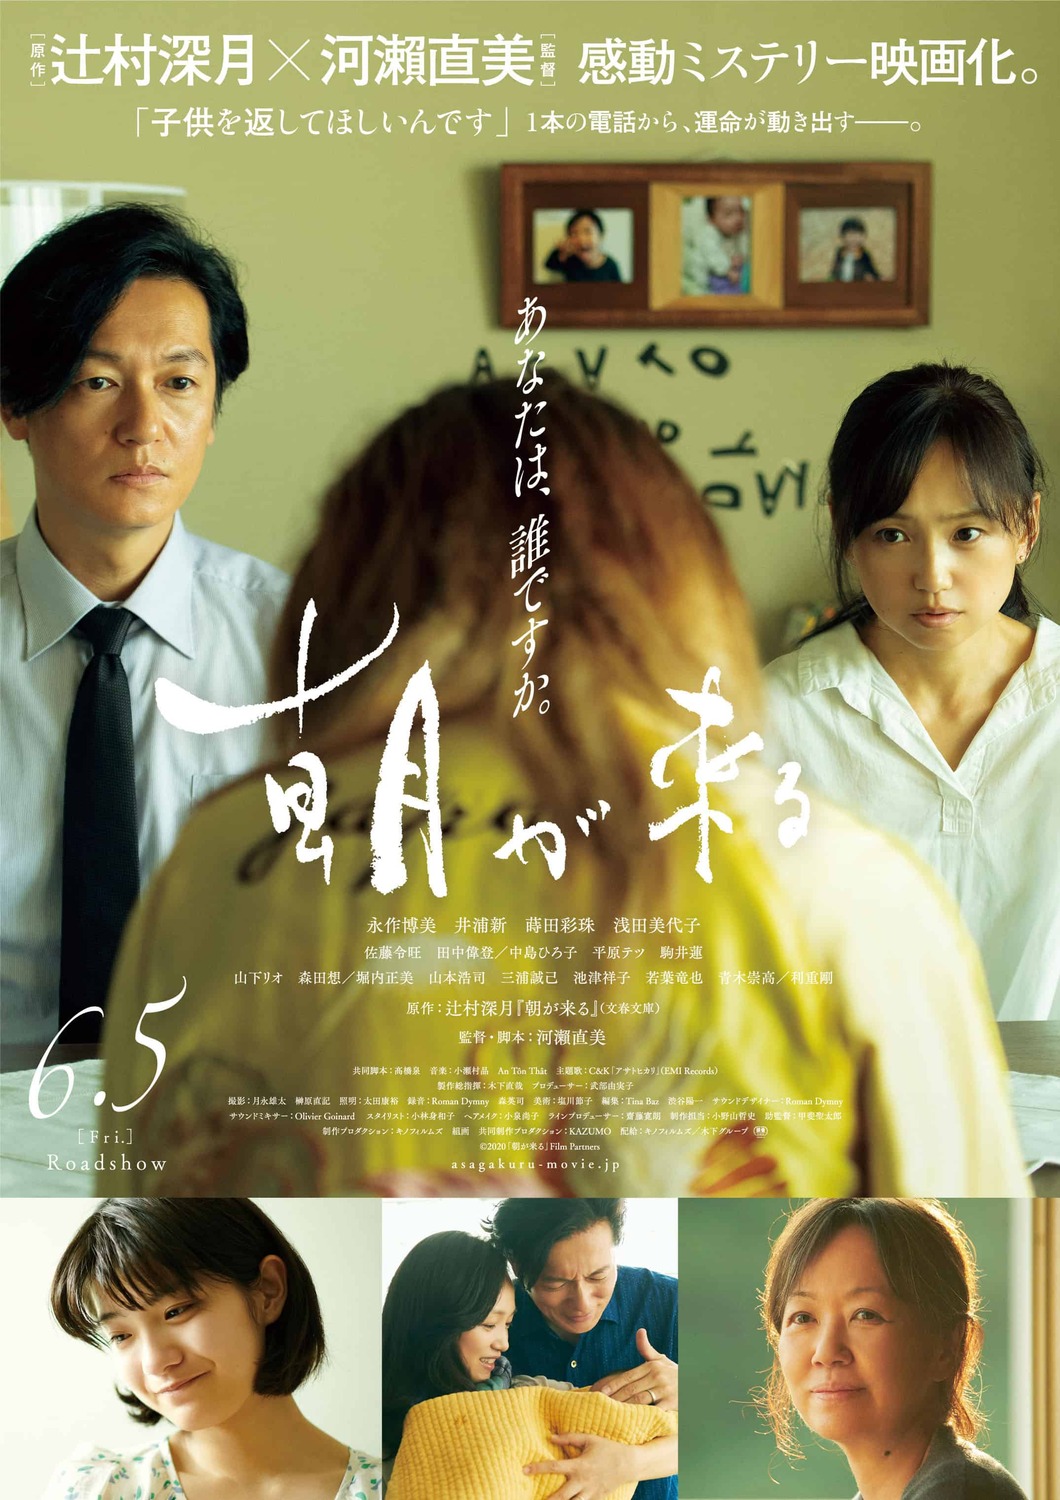 Extra Large Movie Poster Image for Asa ga Kuru 